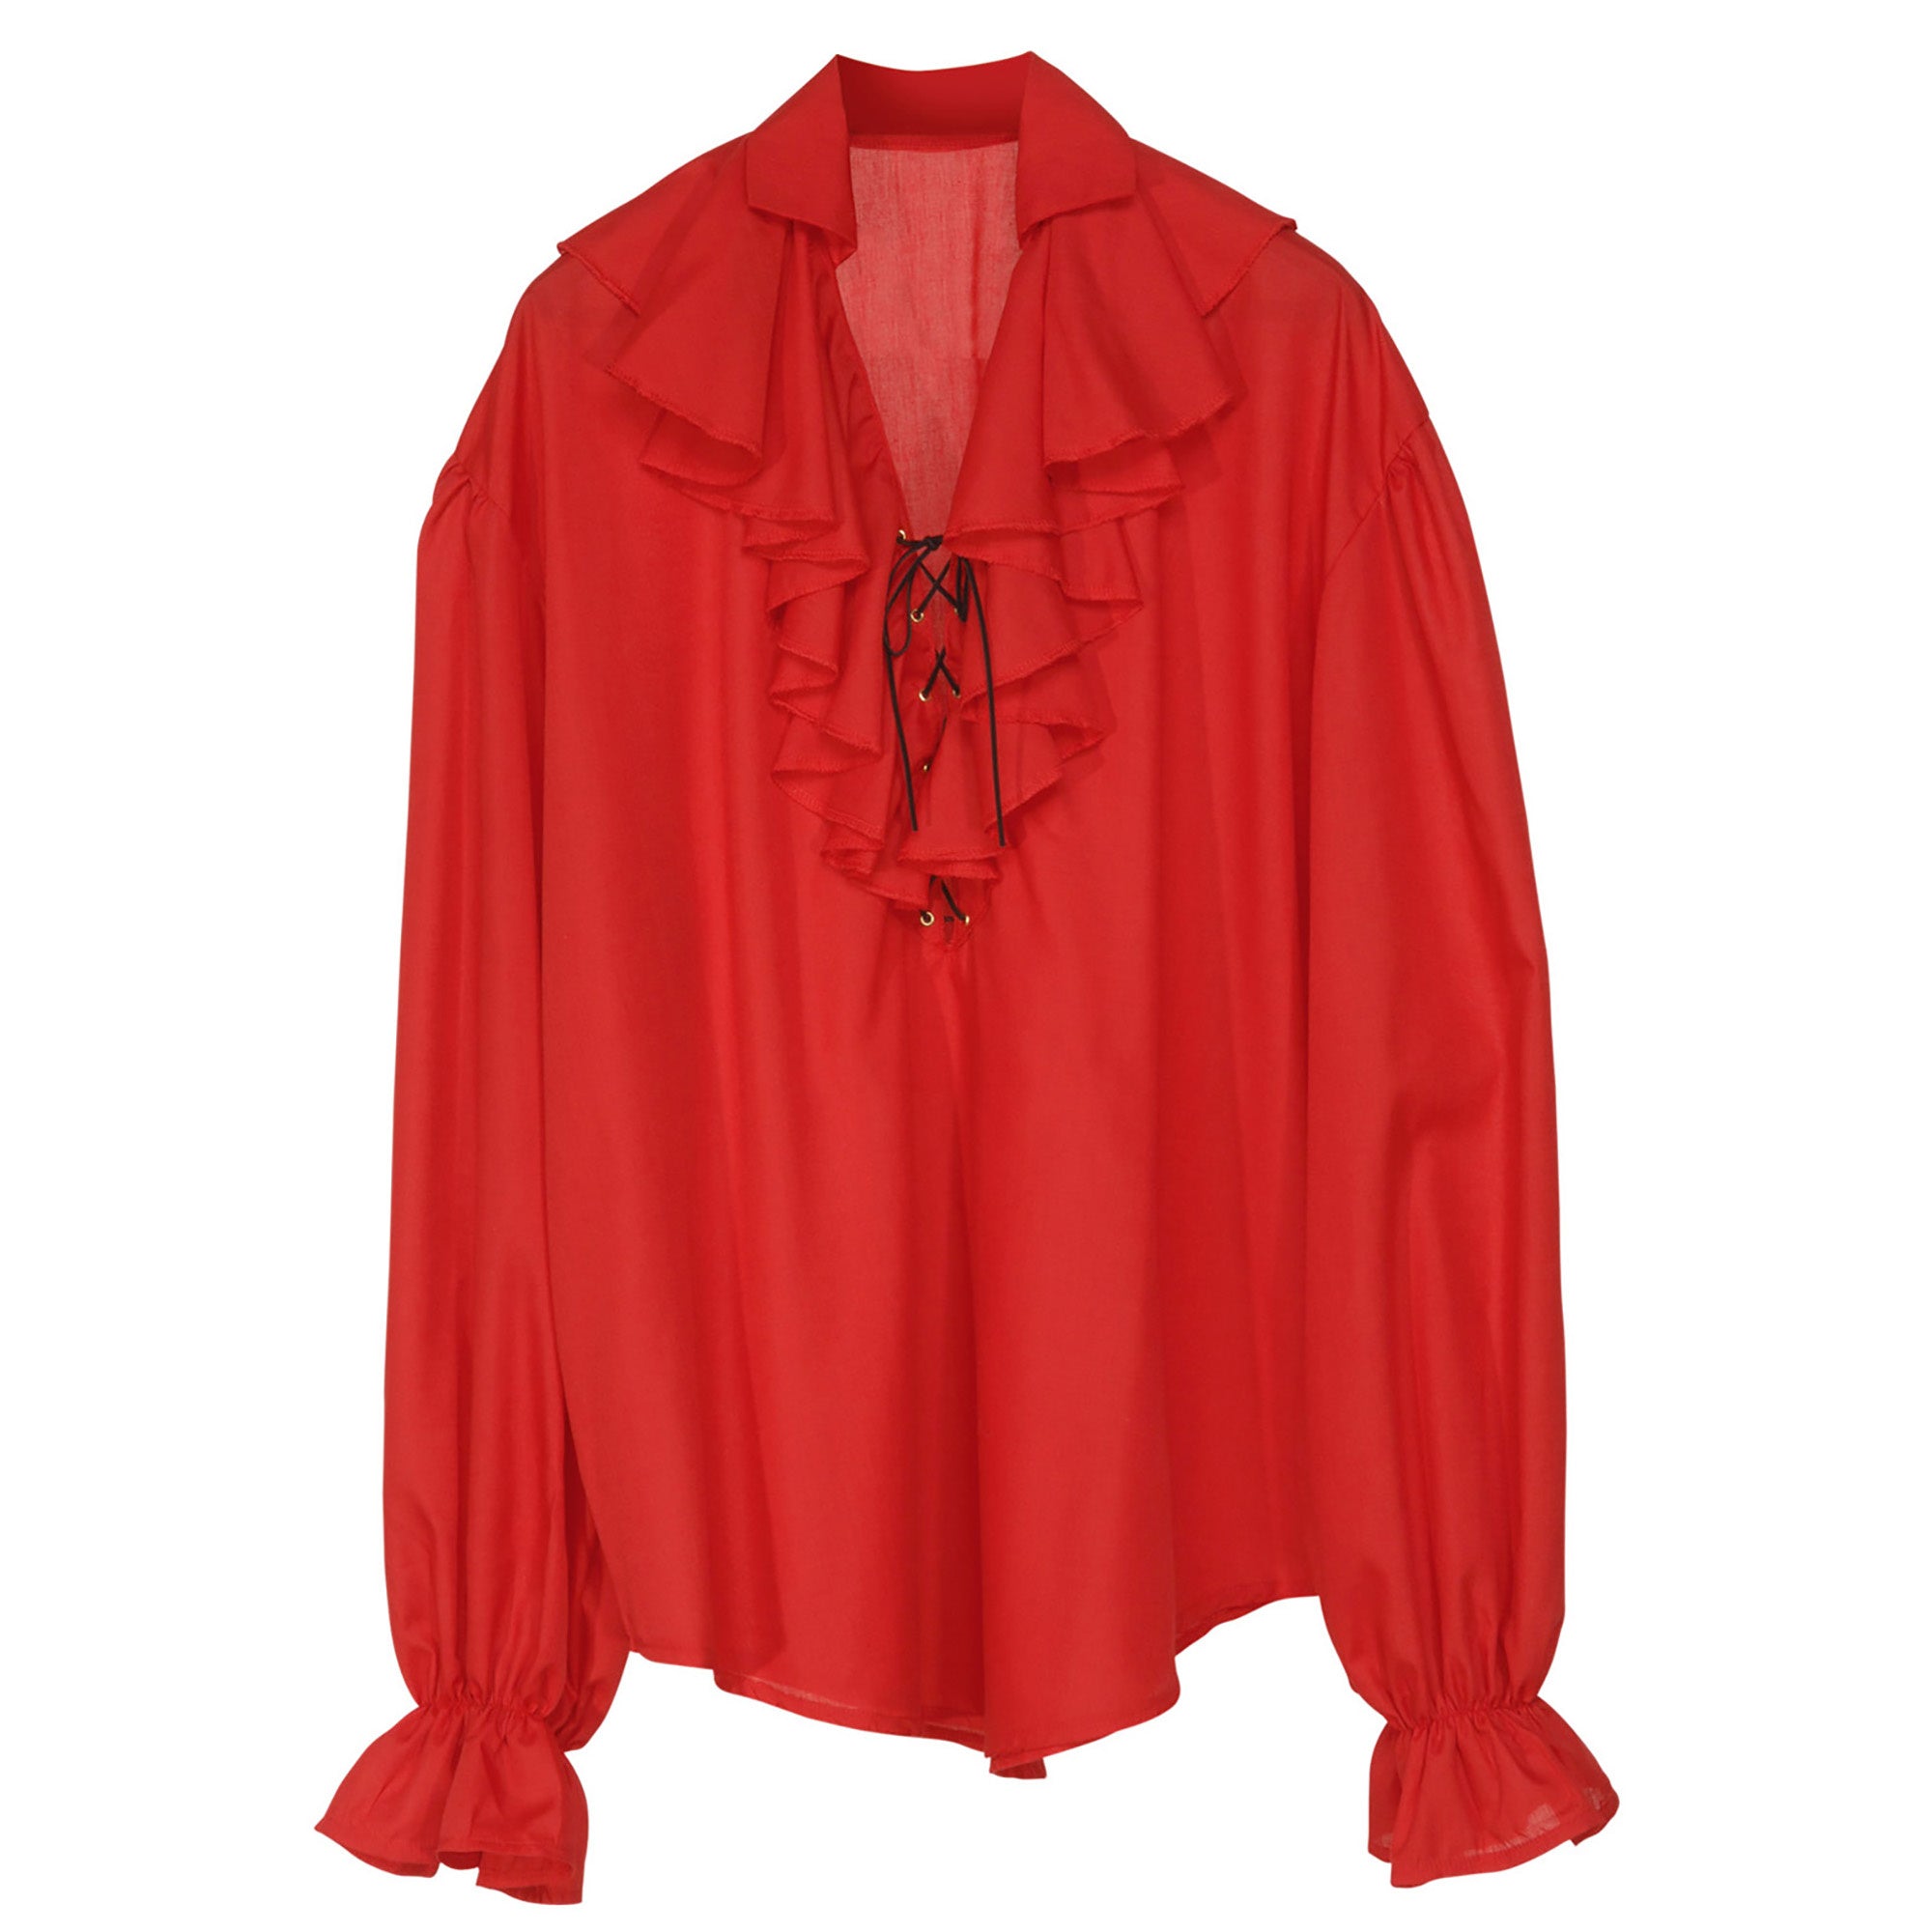 Rode piraten blouse voor mannen - Verkleedkleding